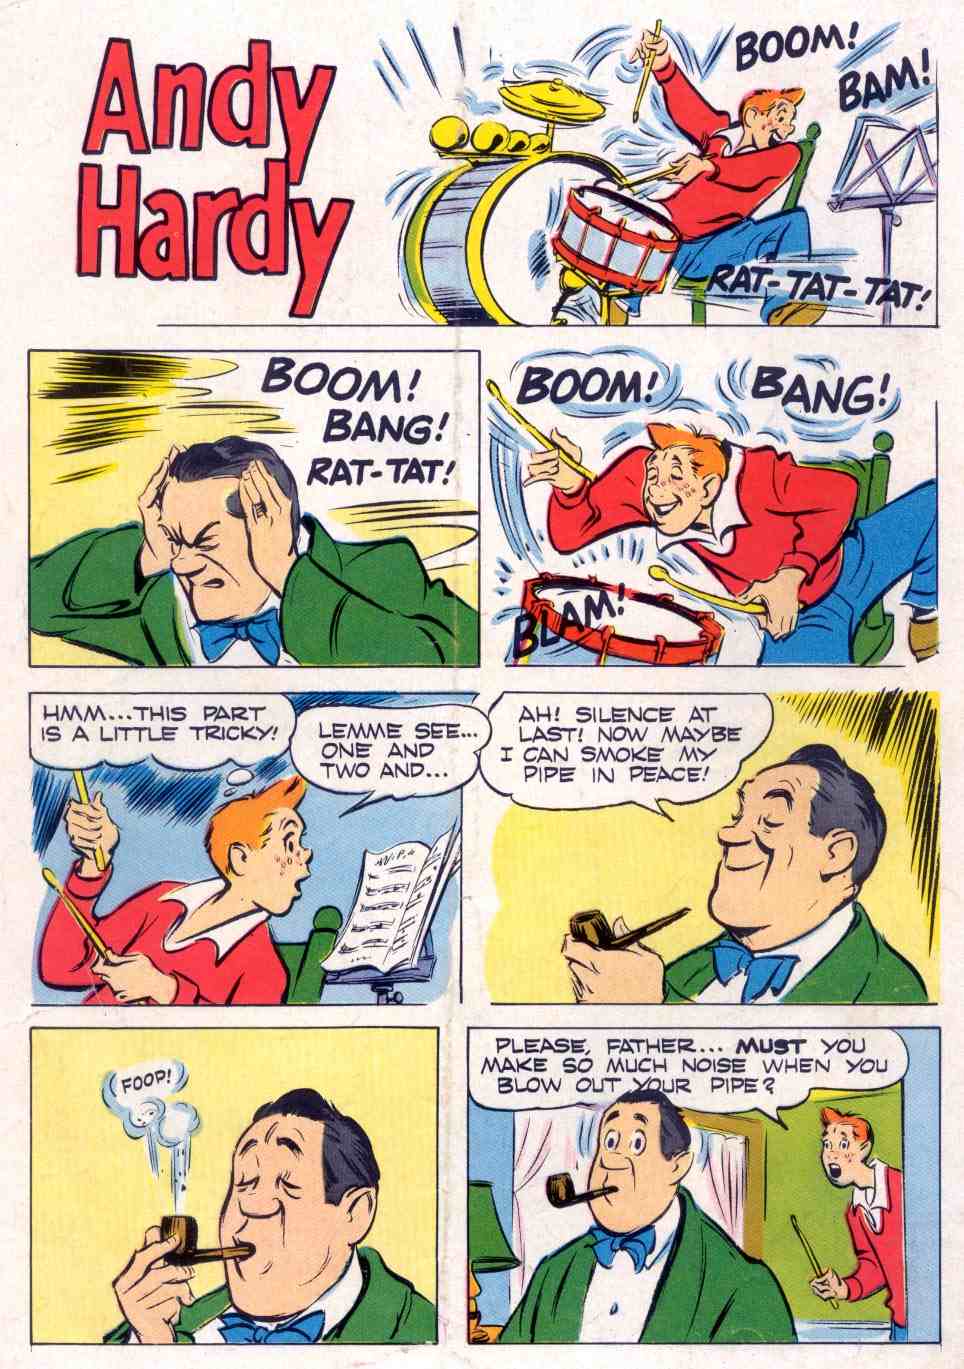 Andy-Hardy-Comic-Strips (36)